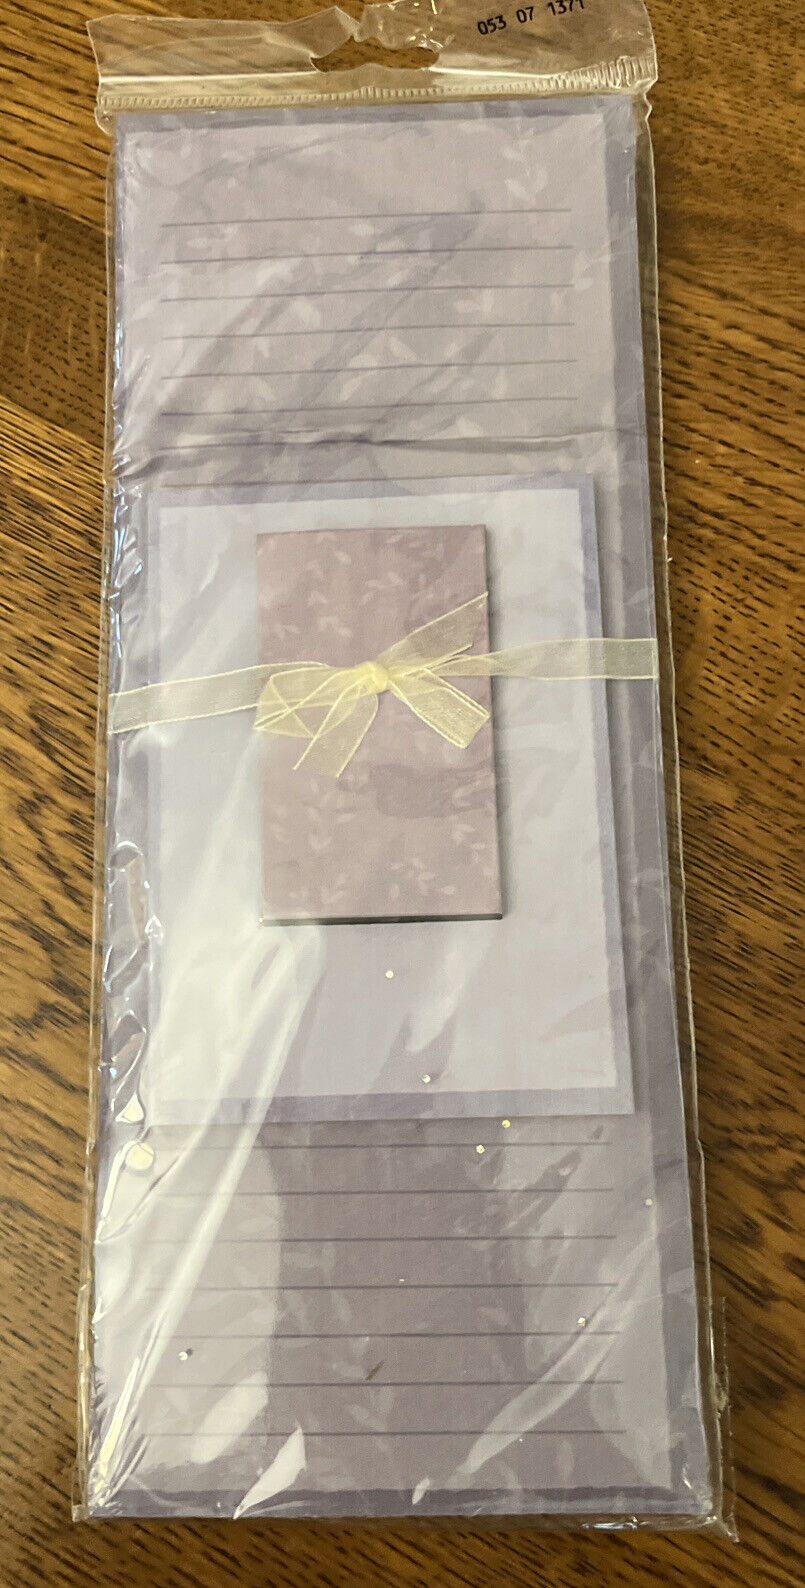 Stationary Gift Set New Sealed 2003 NOS List Pad Self Stick Notes Decor Magnet